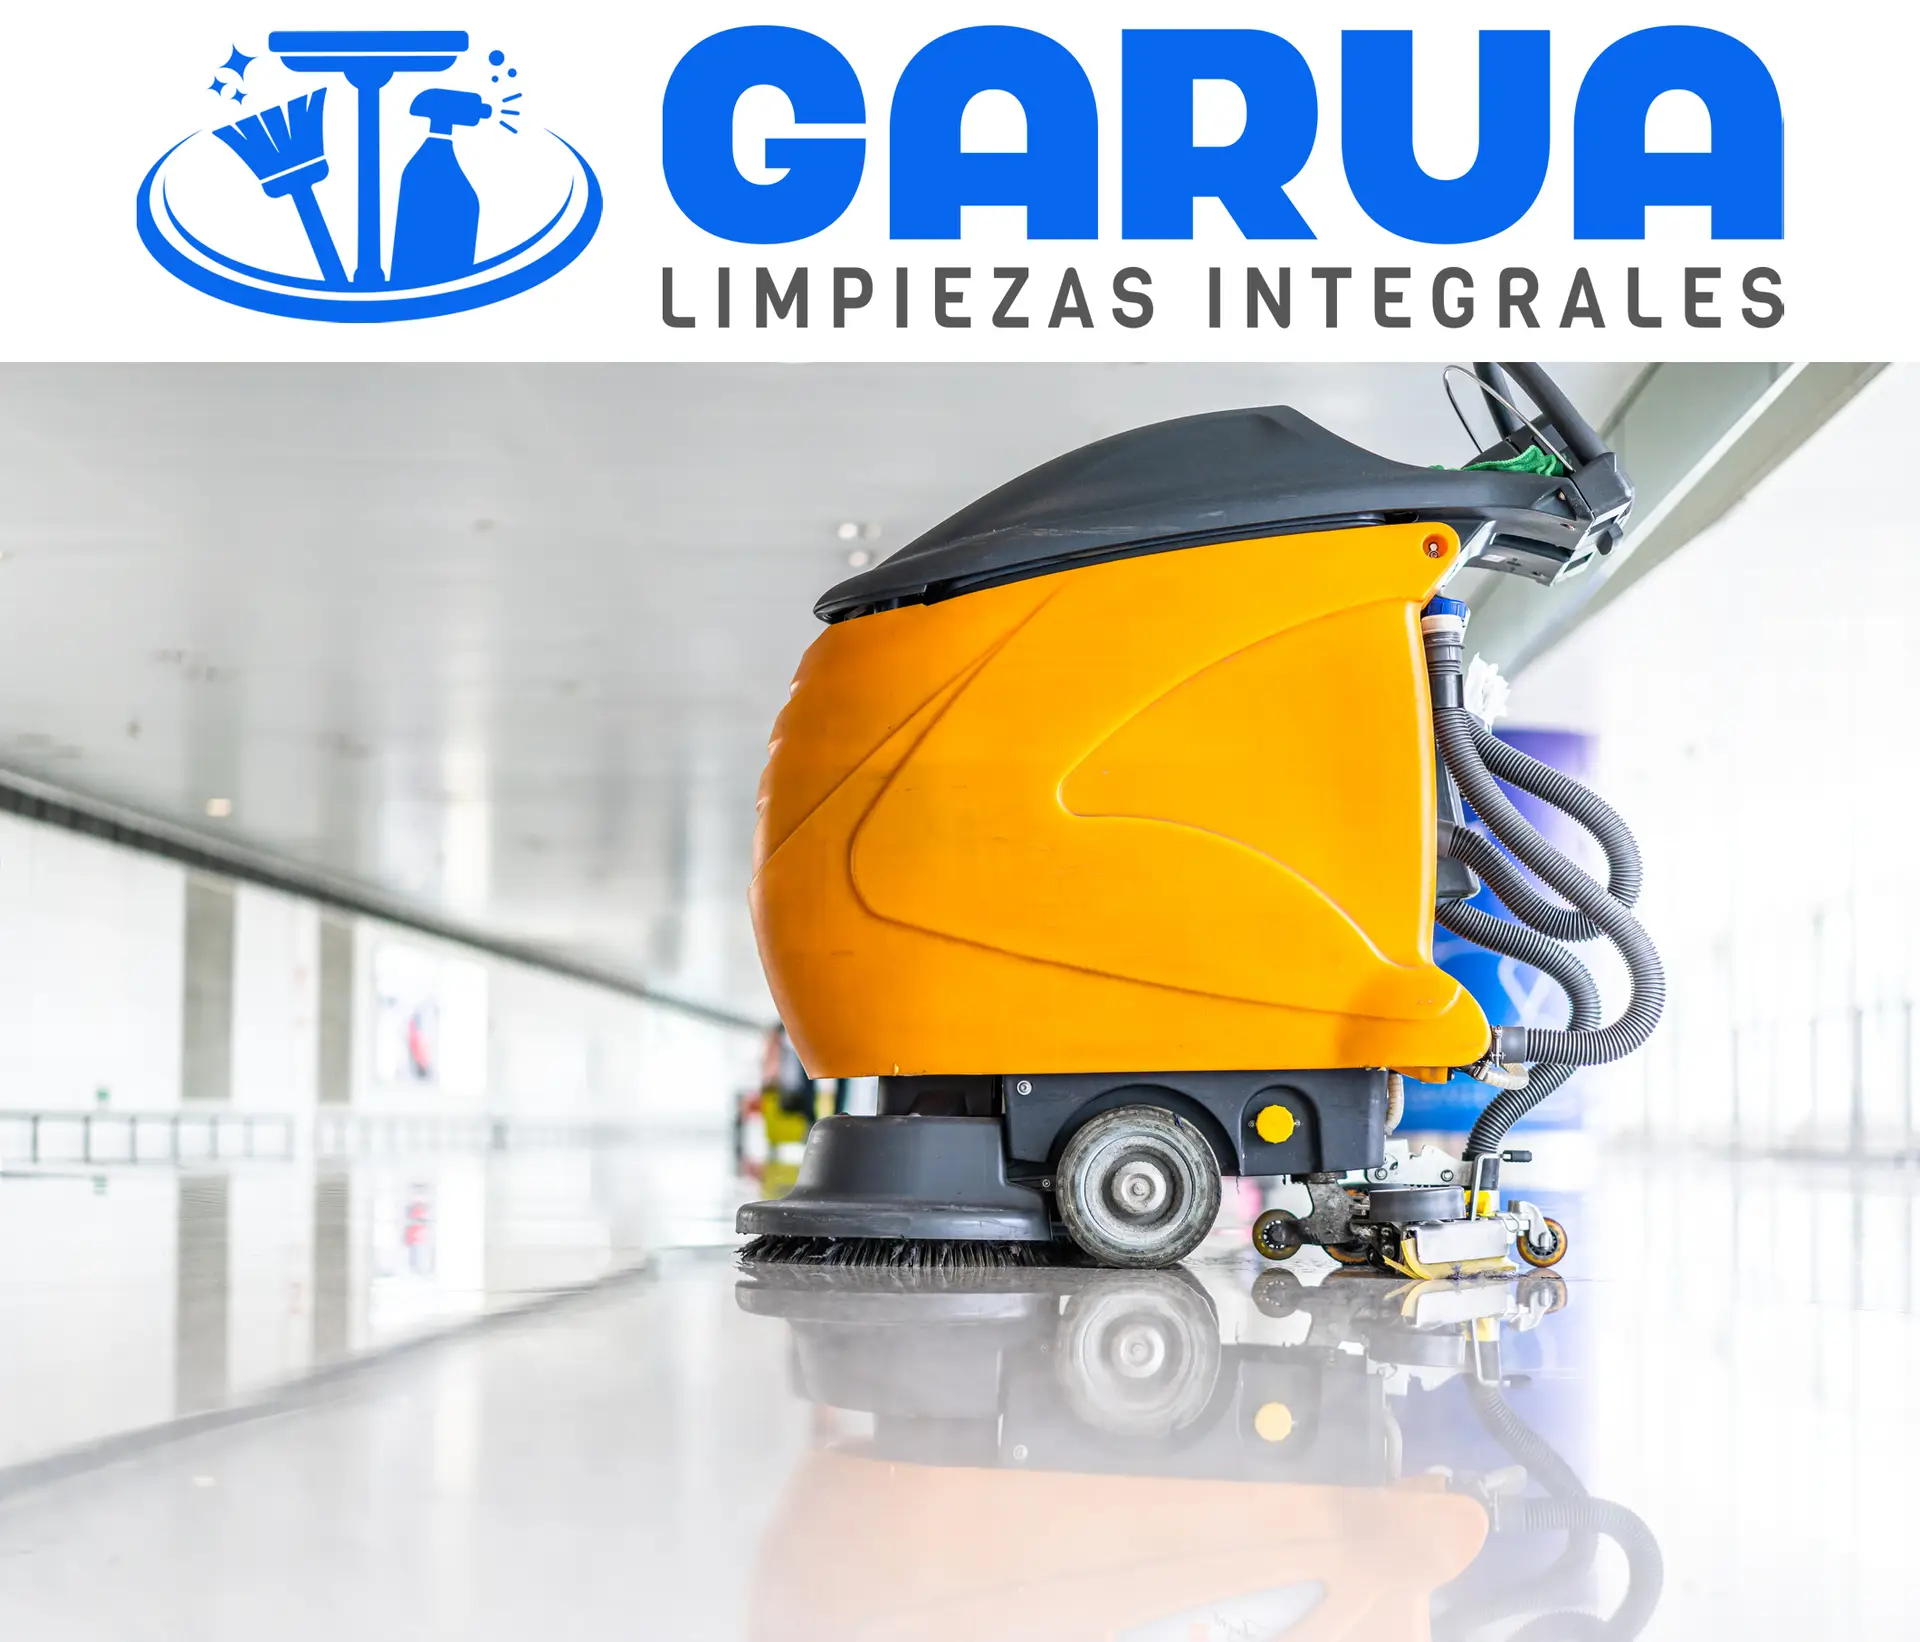 Logo GARUA + Maquina limpieza